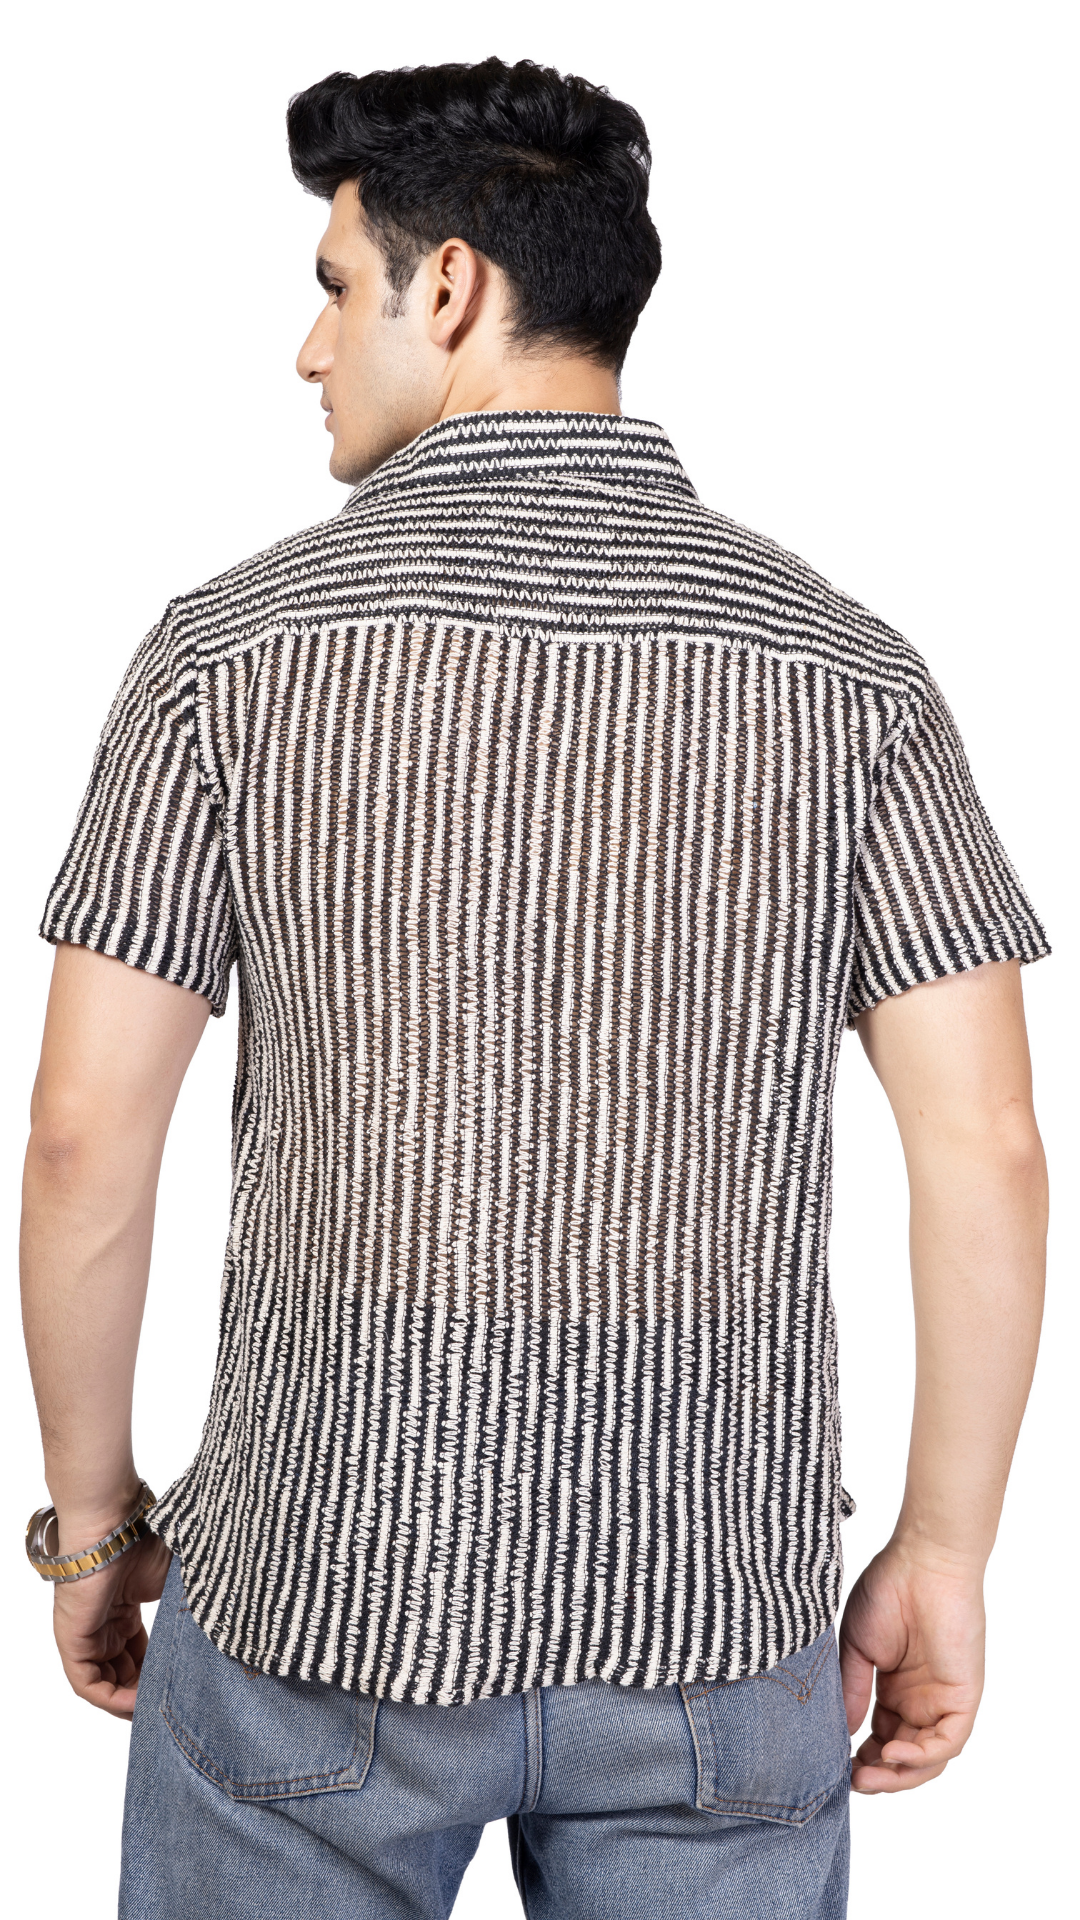 Small Stripe Black And White Crochet Shirt